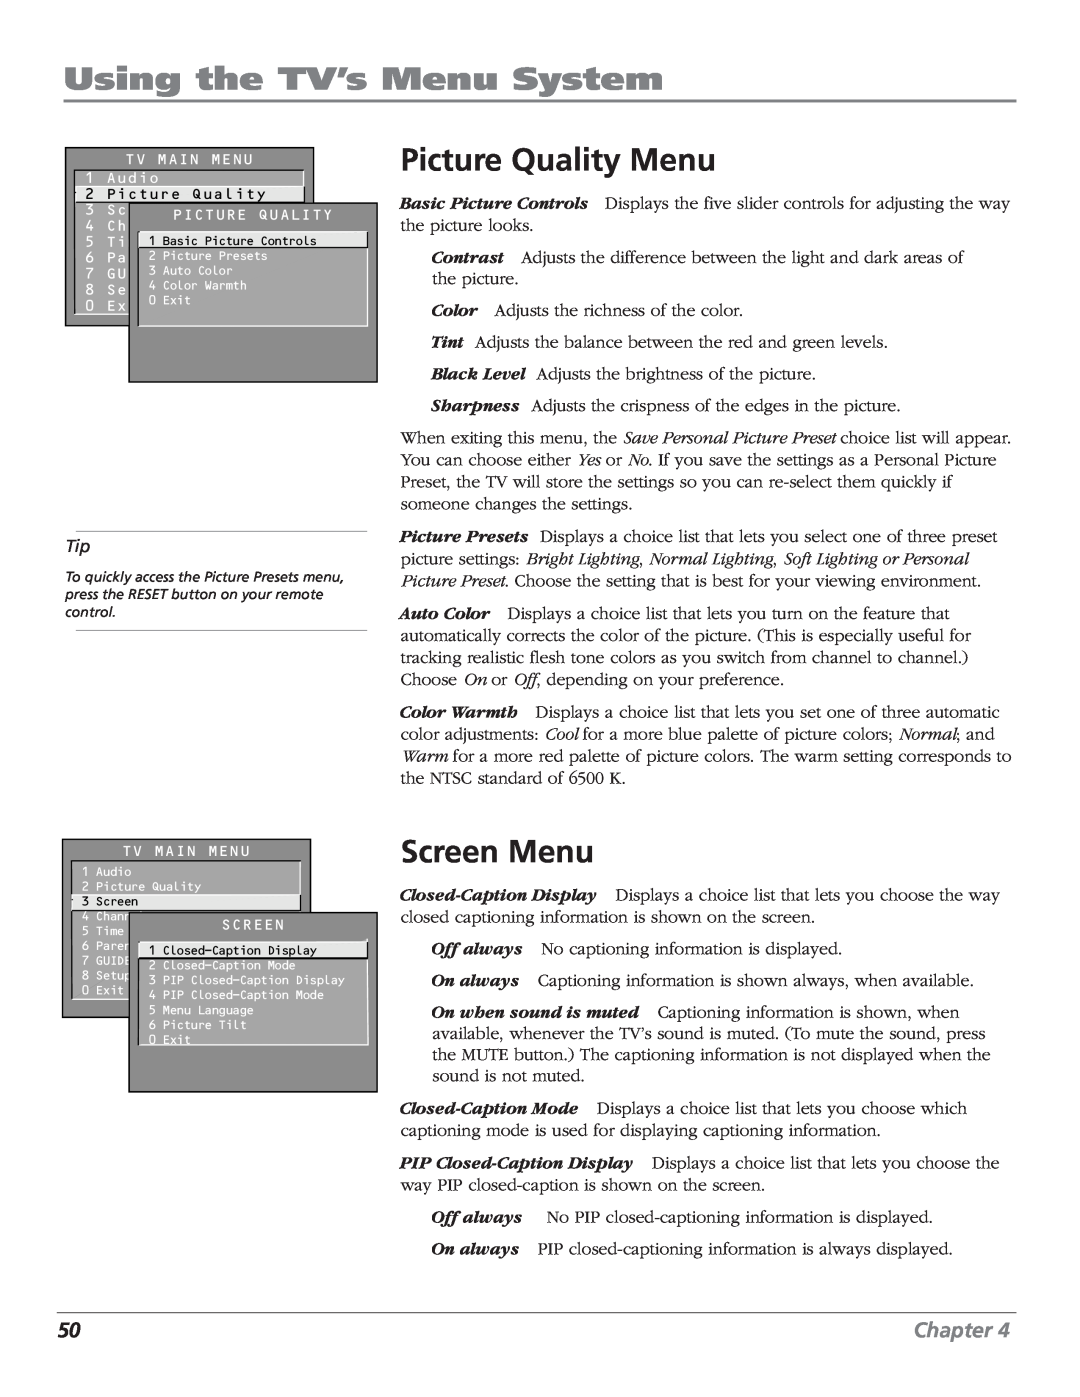 RCA F27669 manual Picture Quality Menu, Screen Menu, Using the TV’s Menu System, Chapter 